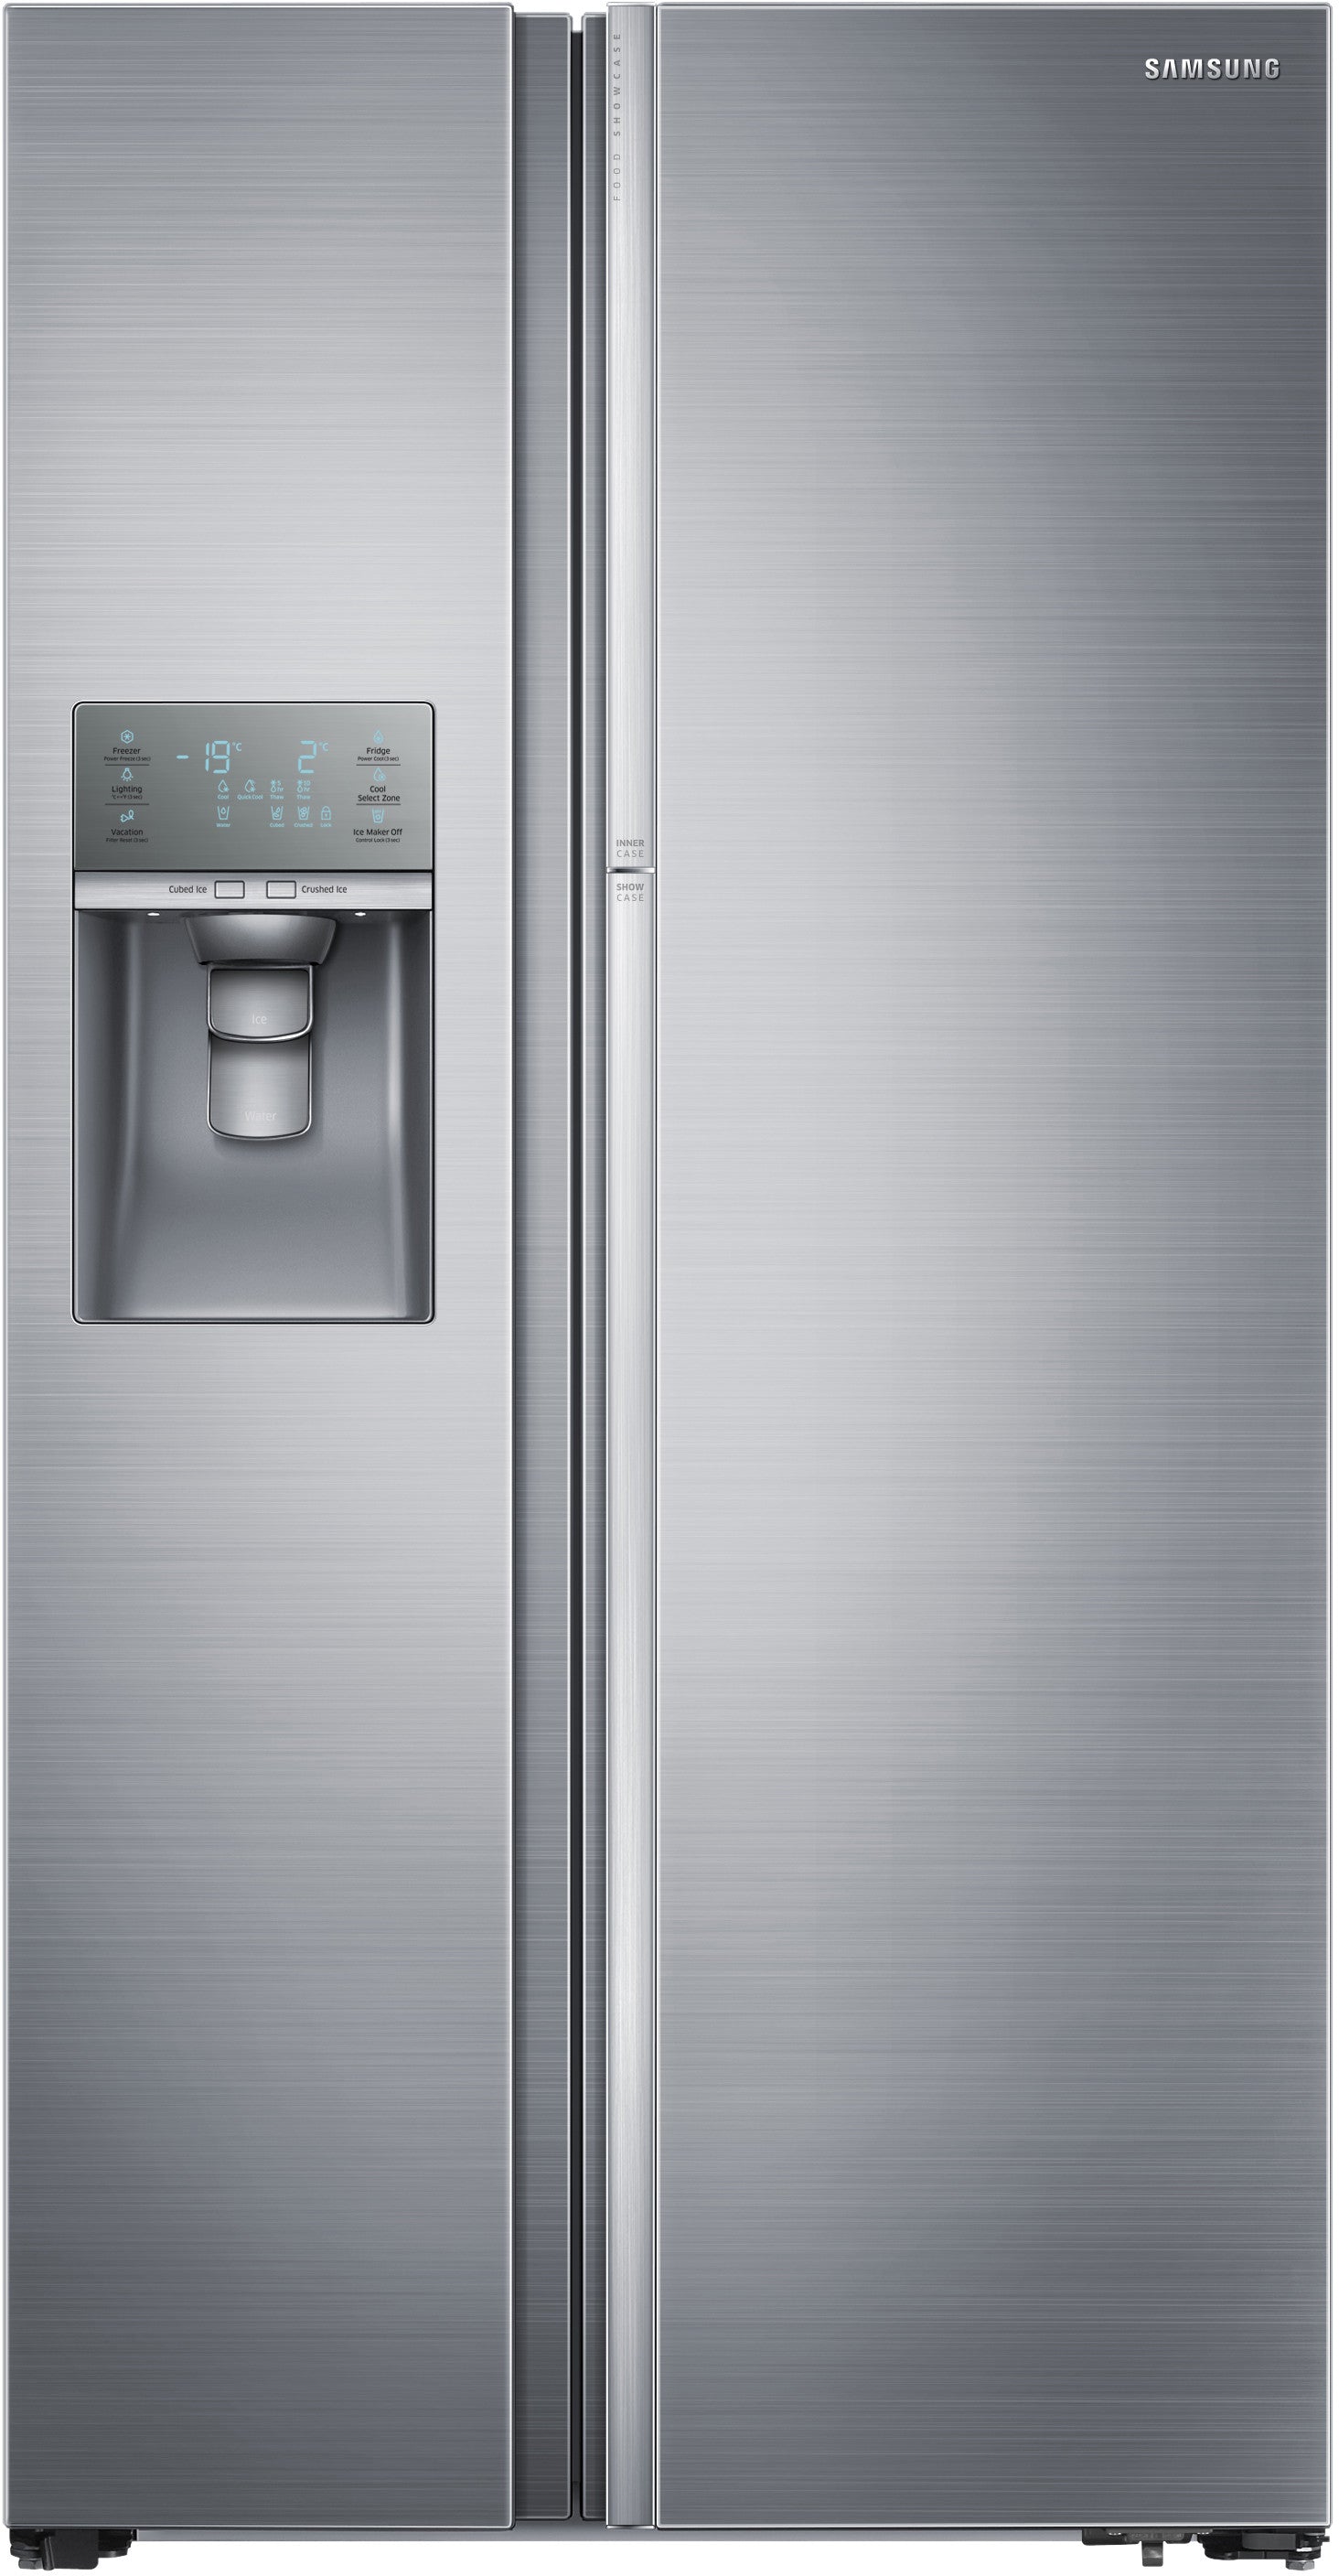 Samsung RH29H9000SR/AA 28.7 Cu. Ft. Side-by-side Refrigerator - Samsung Parts USA